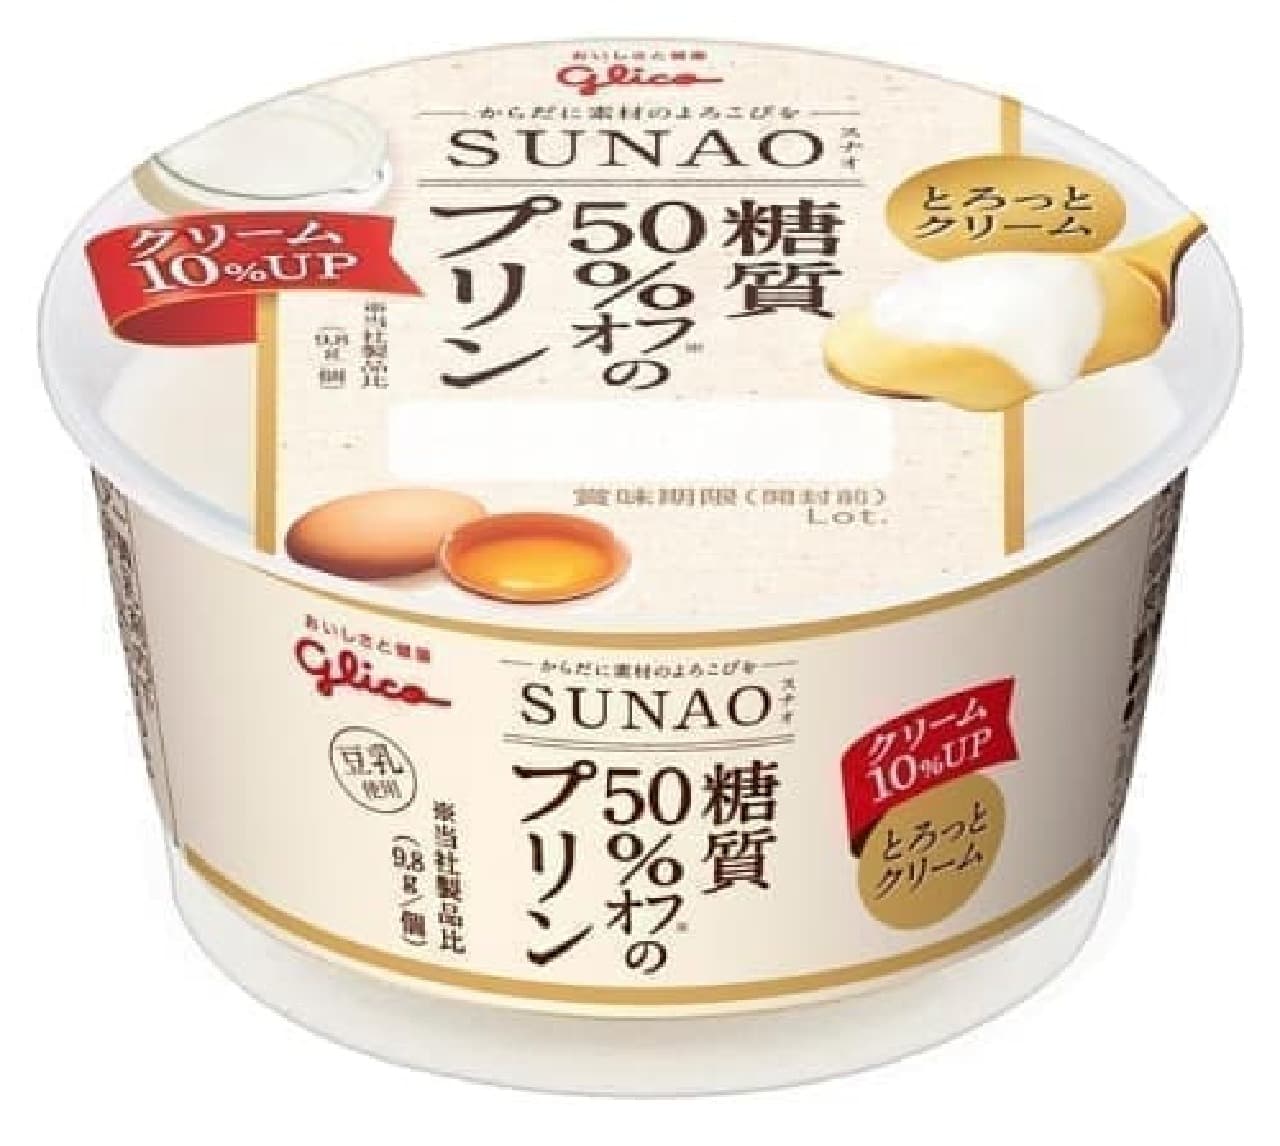 Sunao [50% off sugar pudding]